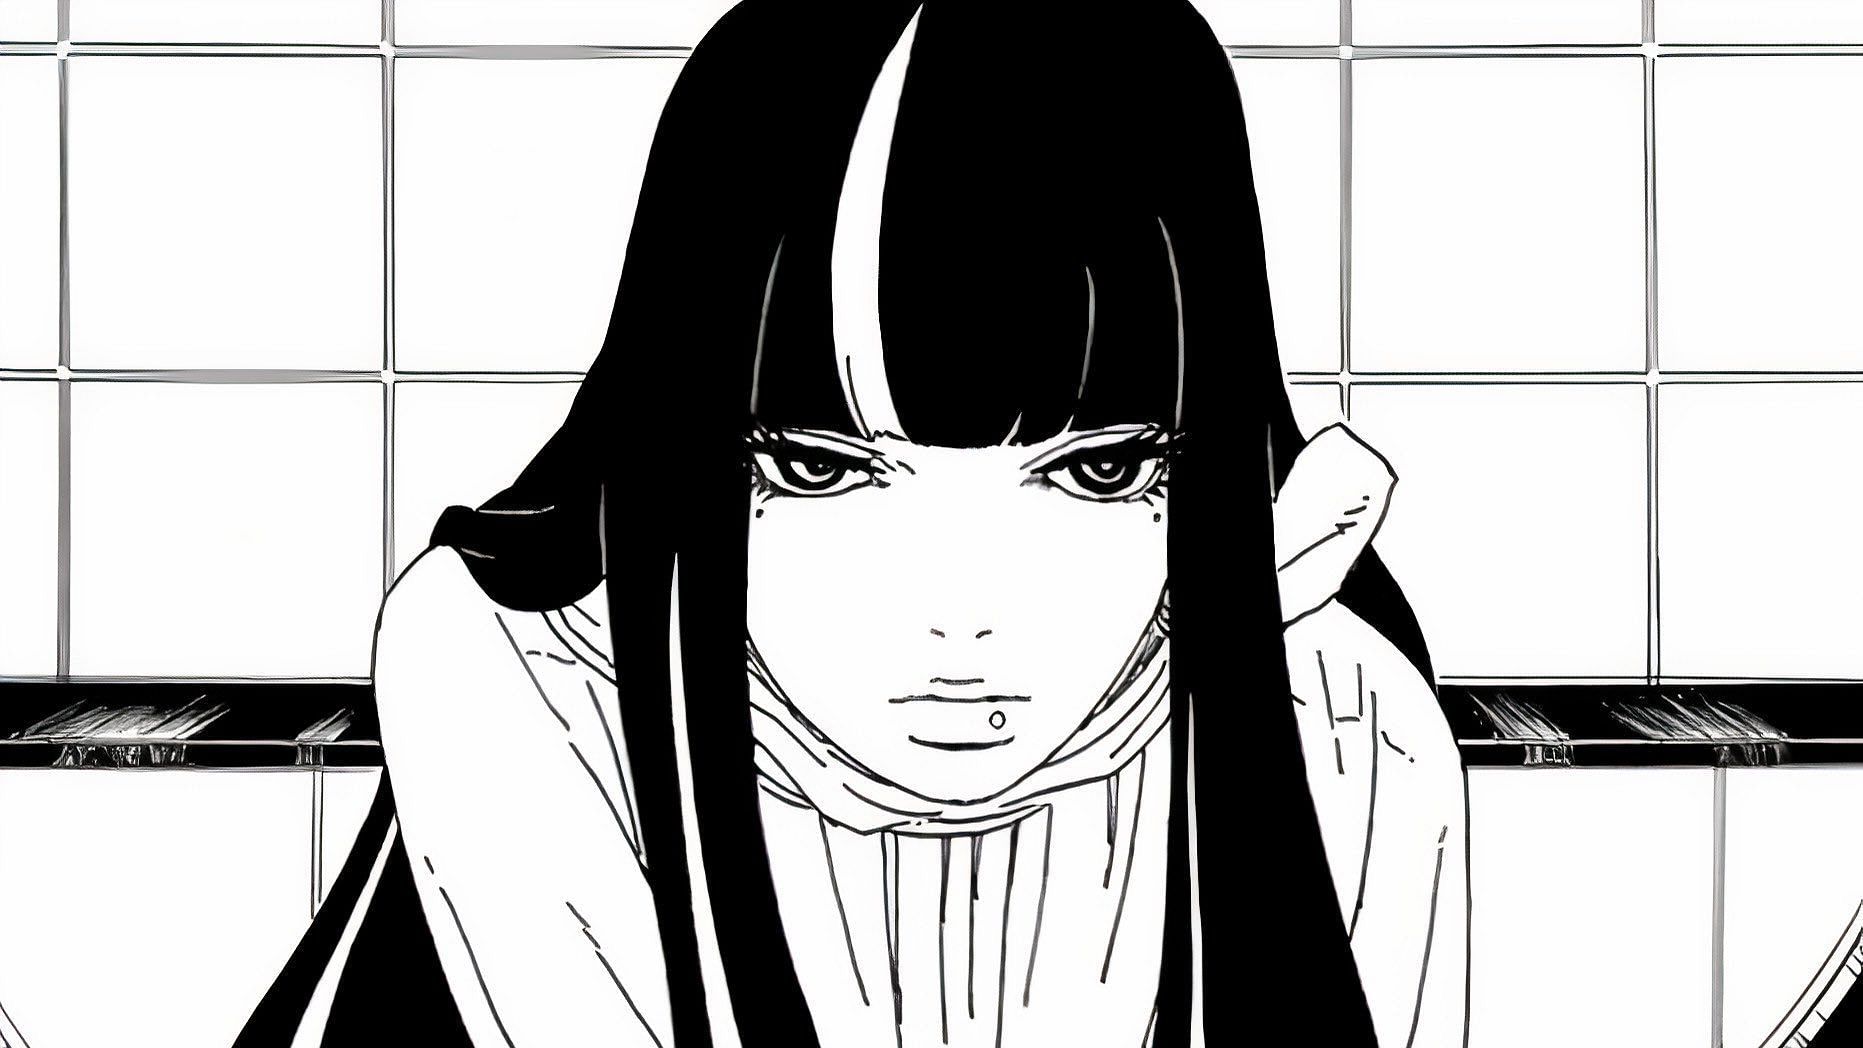 Image of Eida from the Boruto Manga (Image via Shueisha)